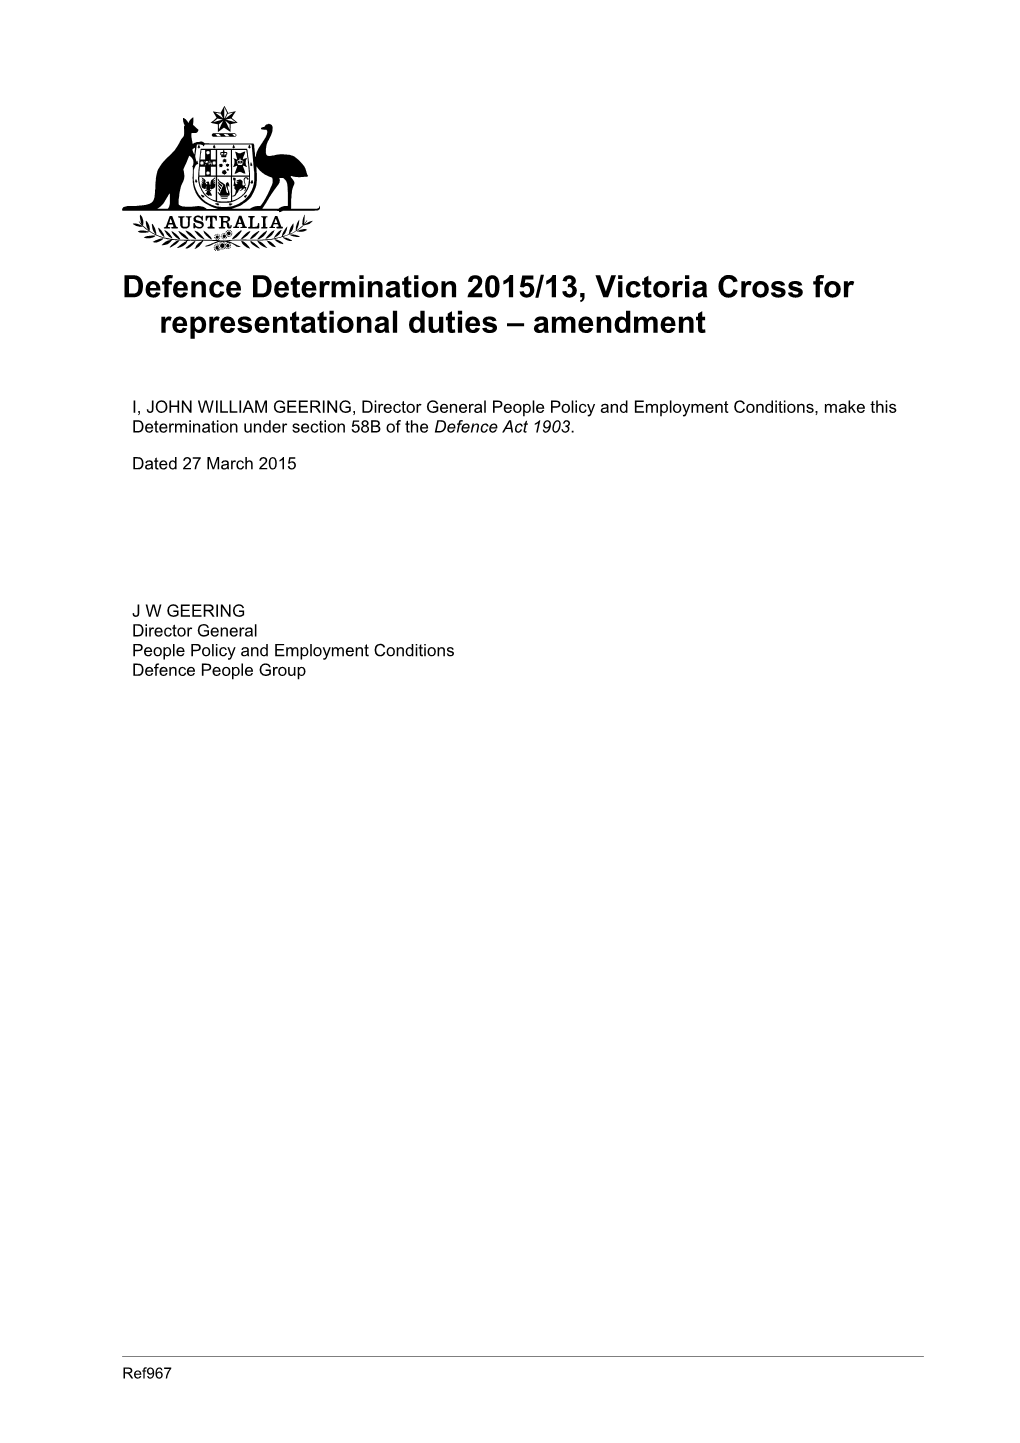 Defence Determination 2015/13, Victoria Cross for Representational Duties Amendment